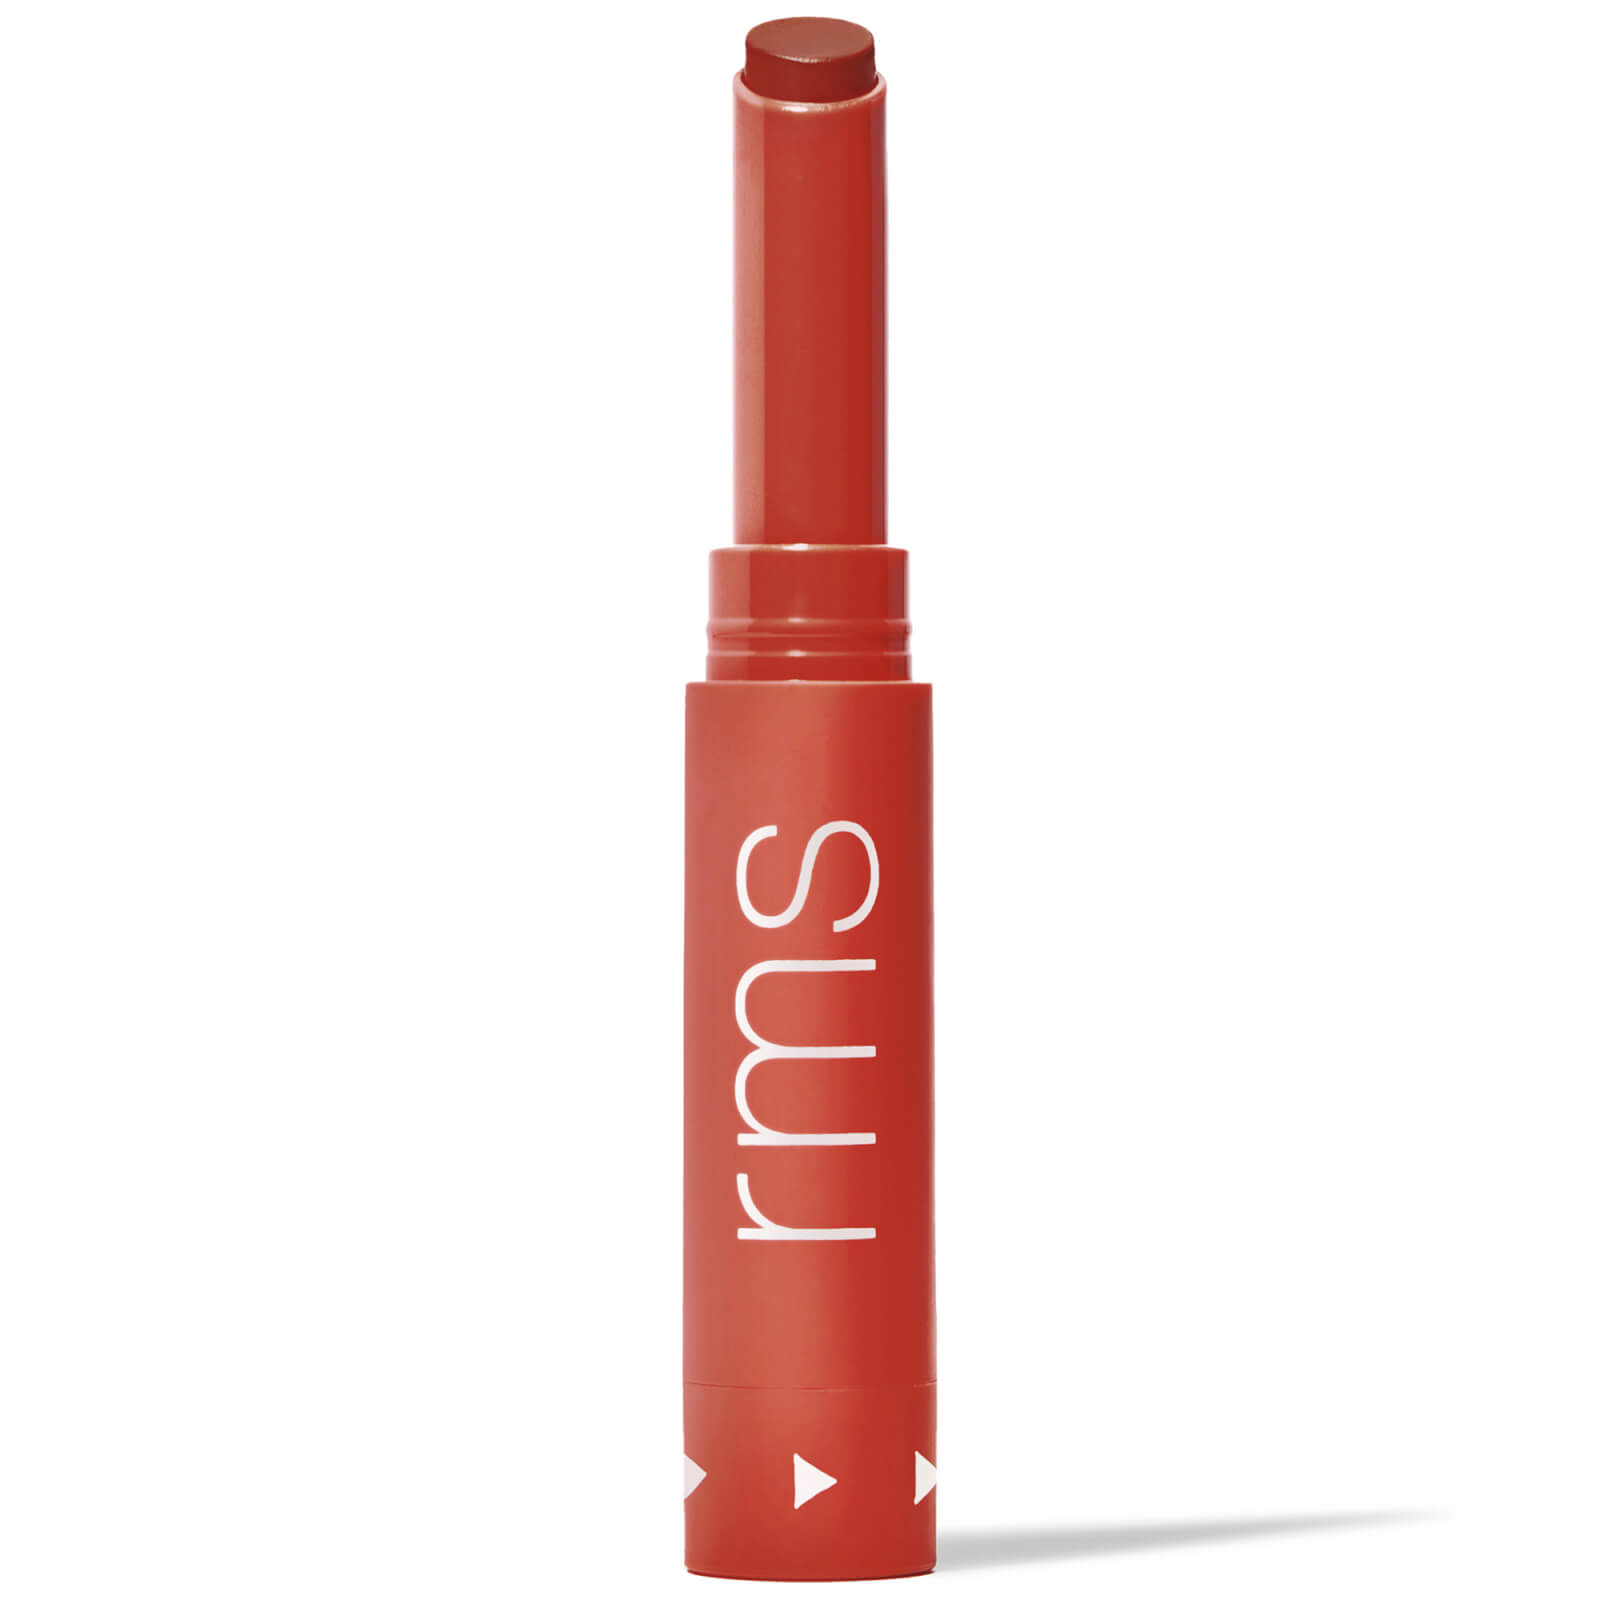 Rms Beauty Legendary Serum Lipstick 21g (various Shades) - Linda